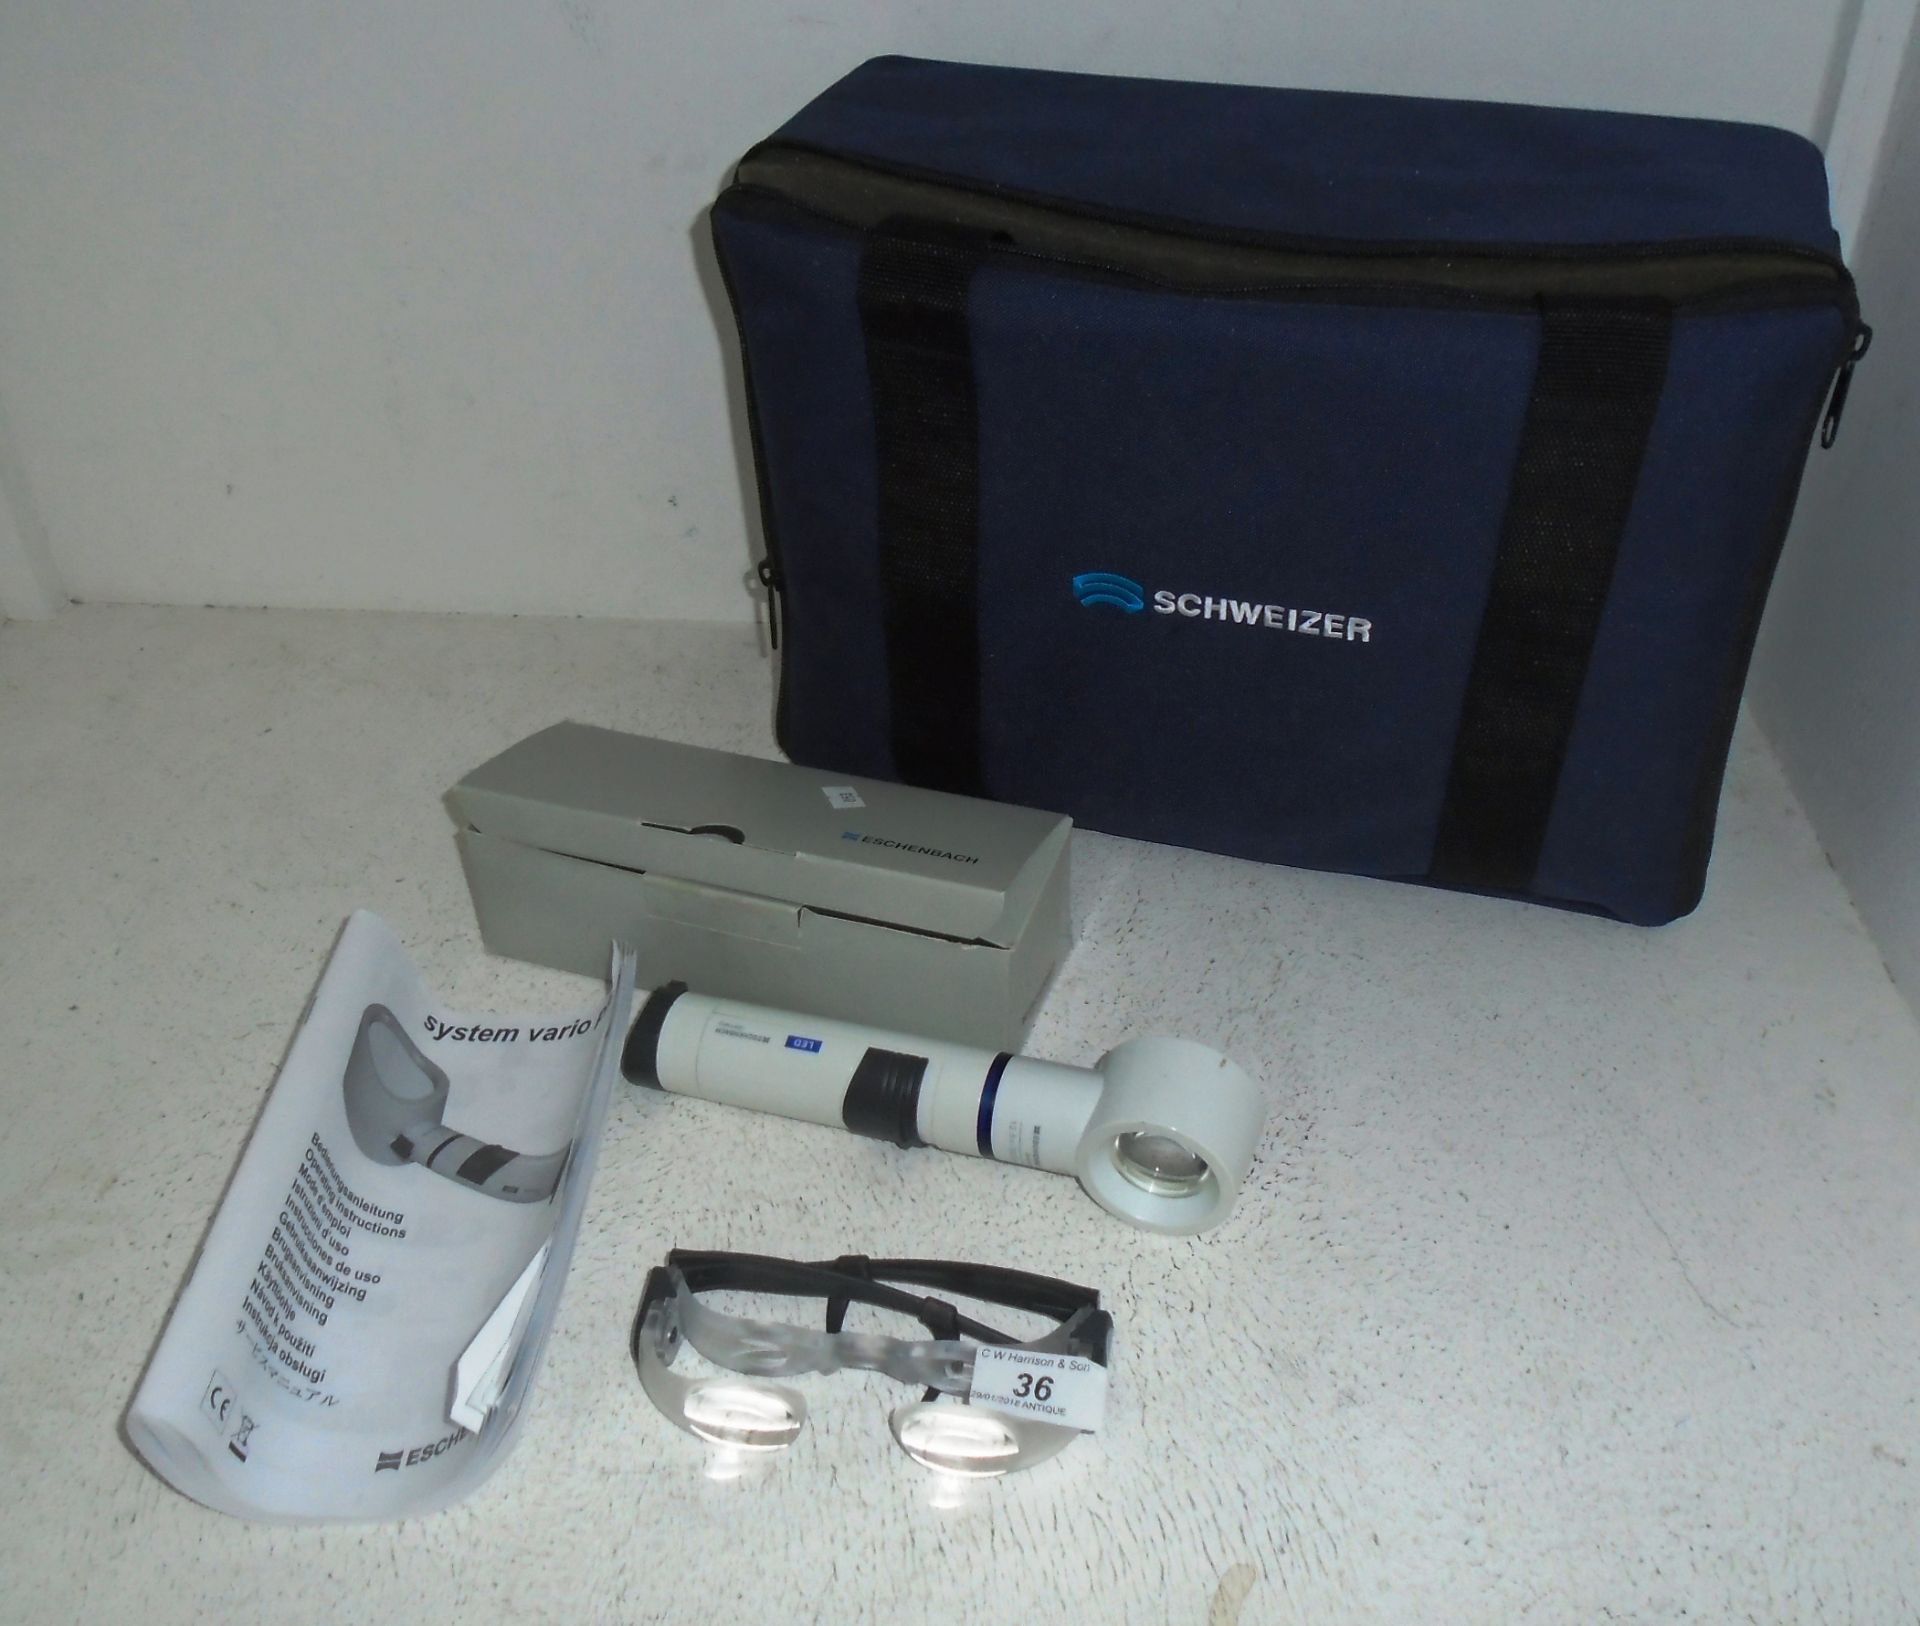 A Eschenbach system Vario Plus magnification unit in case, manual,